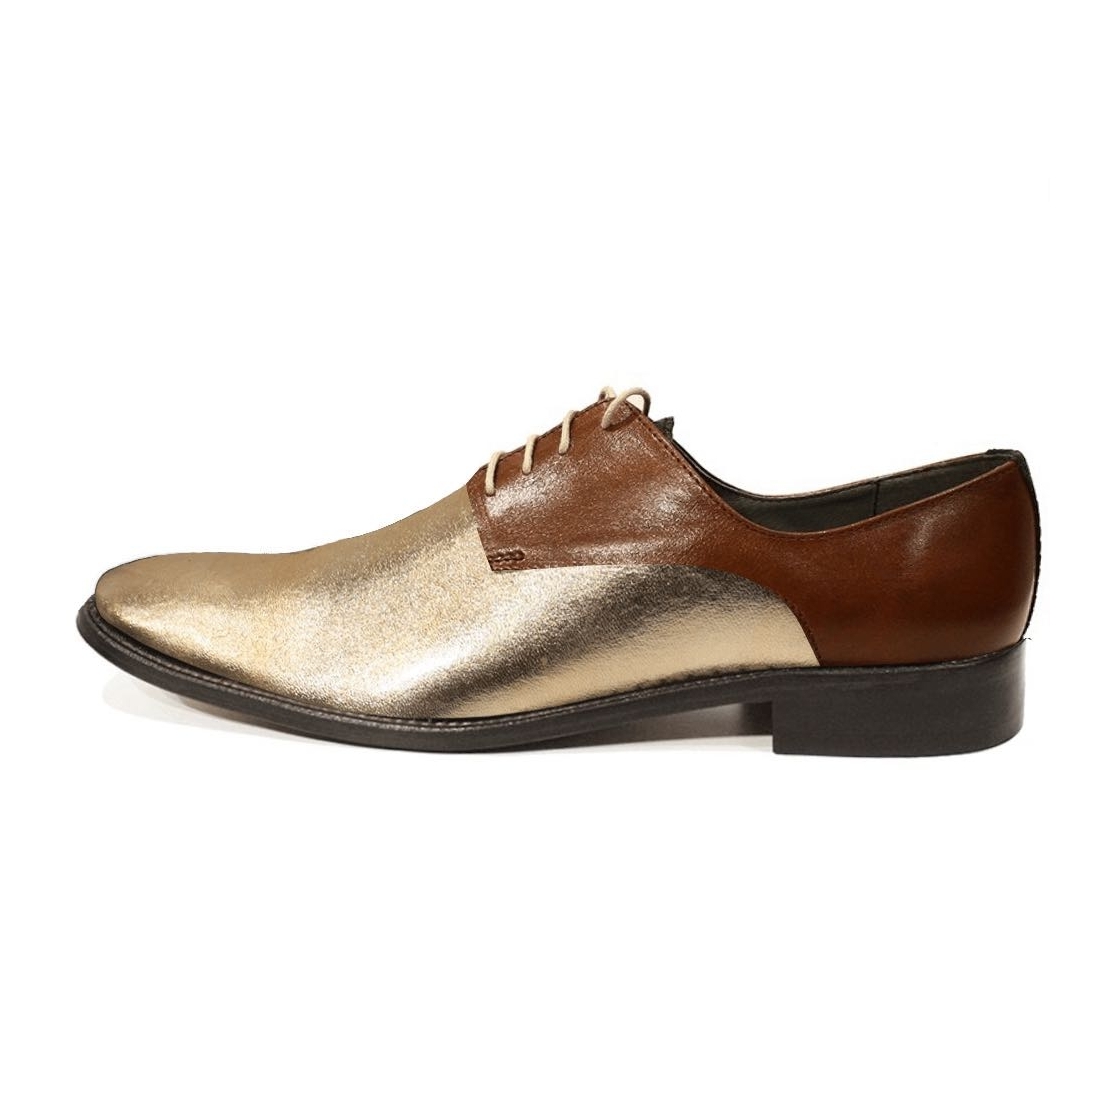 Modello Ronedorra - Chaussure Classique - Handmade Colorful Italian Leather Shoes